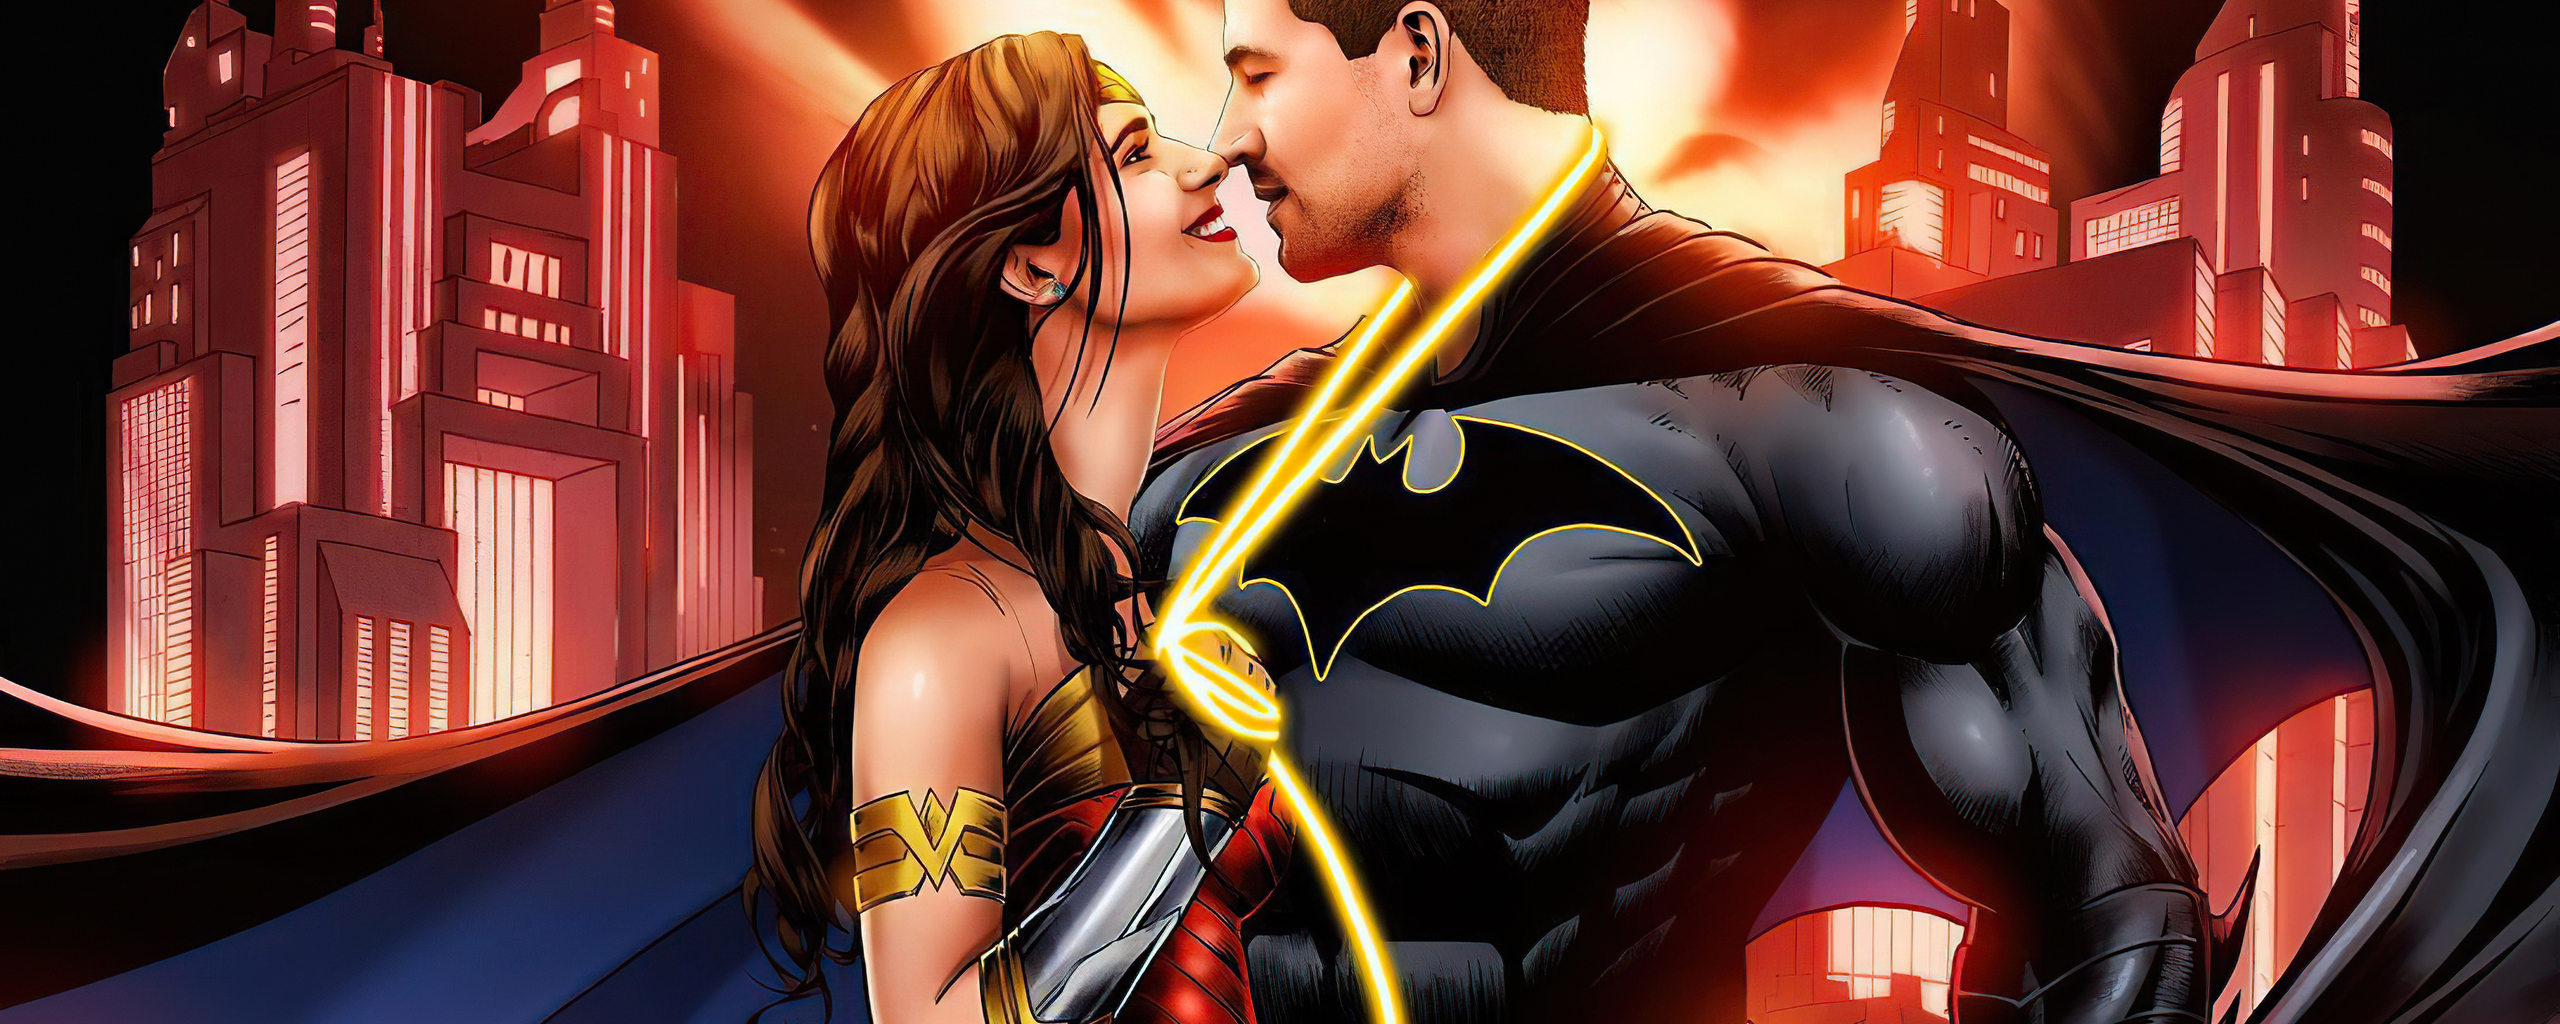 batman-and-wonder-woman-love-romance-aj.jpg